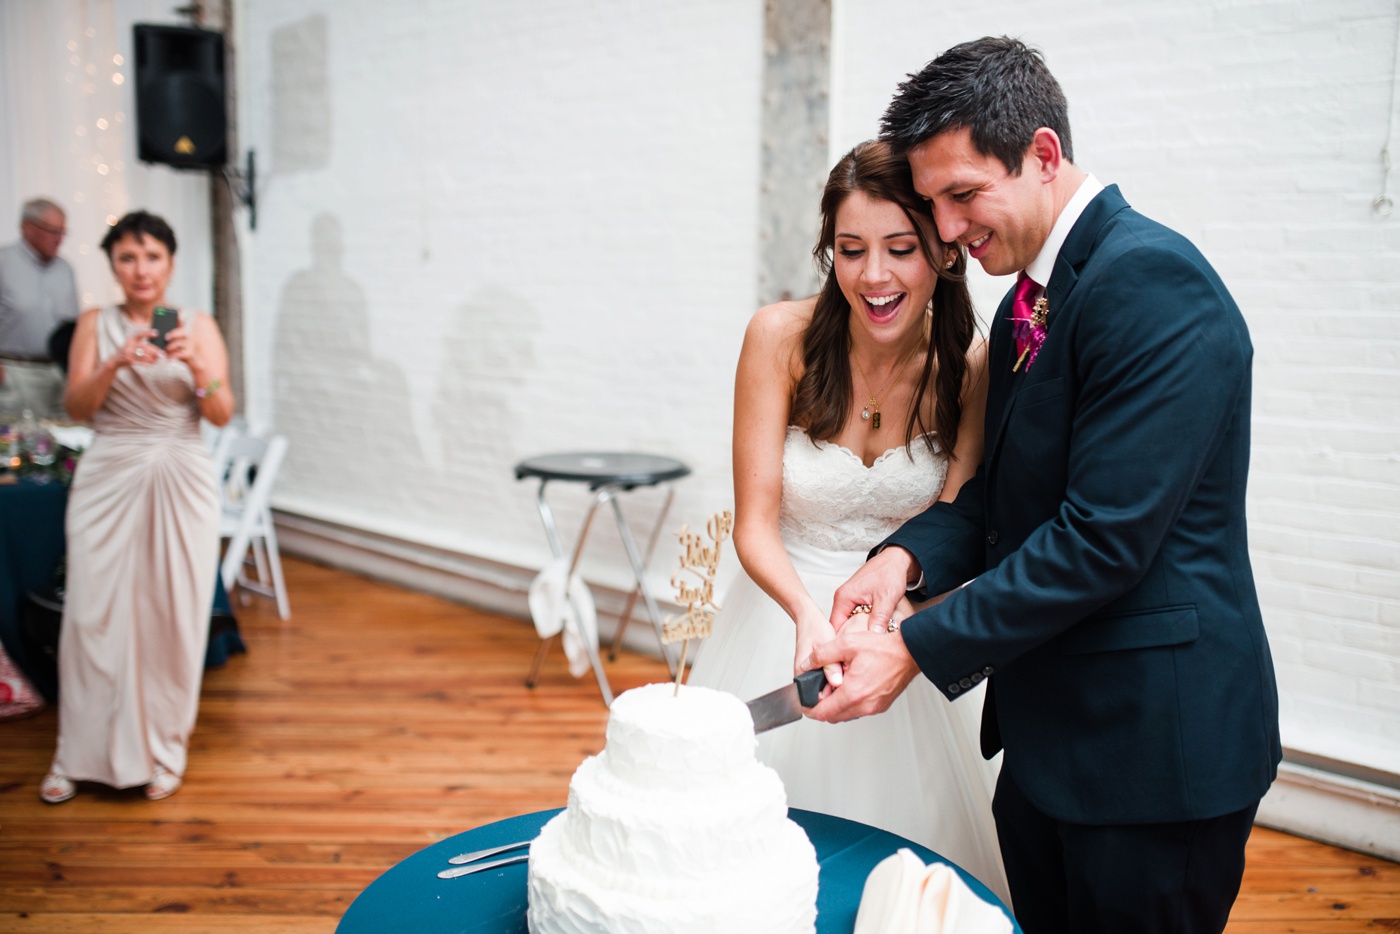 Sarah + Chris - Power Plant Productions Wedding Reception - Philadelphia Wedding Photographer photo